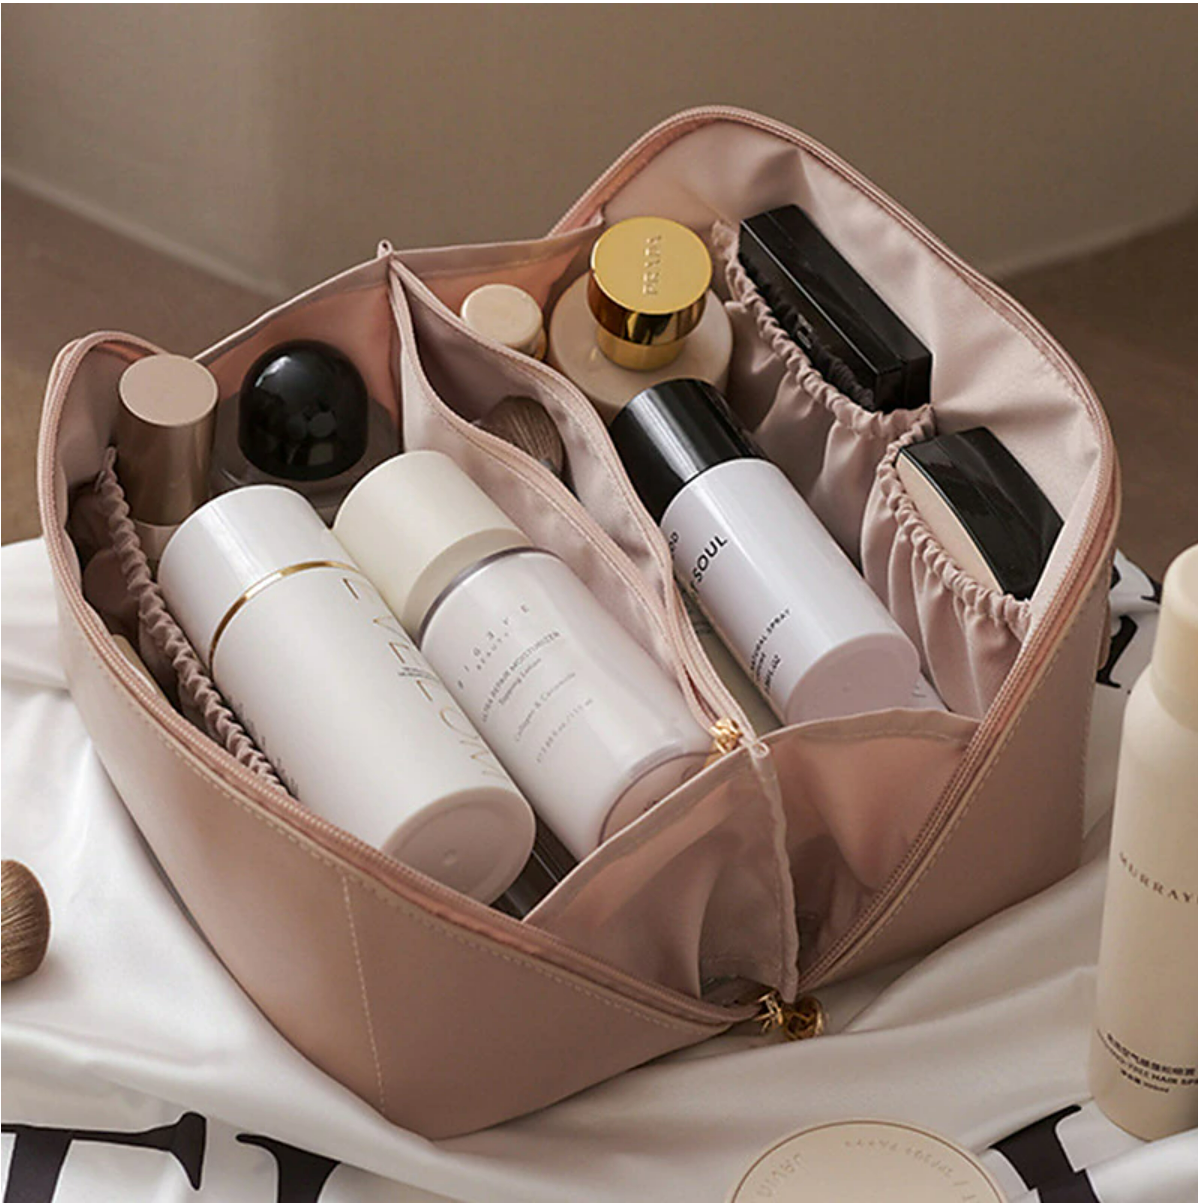 Large Capacity Travel Cosmetic Bag,Waterproof Travel Makeup Toiletry Bag,Multifunctional Storage Makeup Bag With Handle And Dividers, PU Leather Makeup Bag For Women